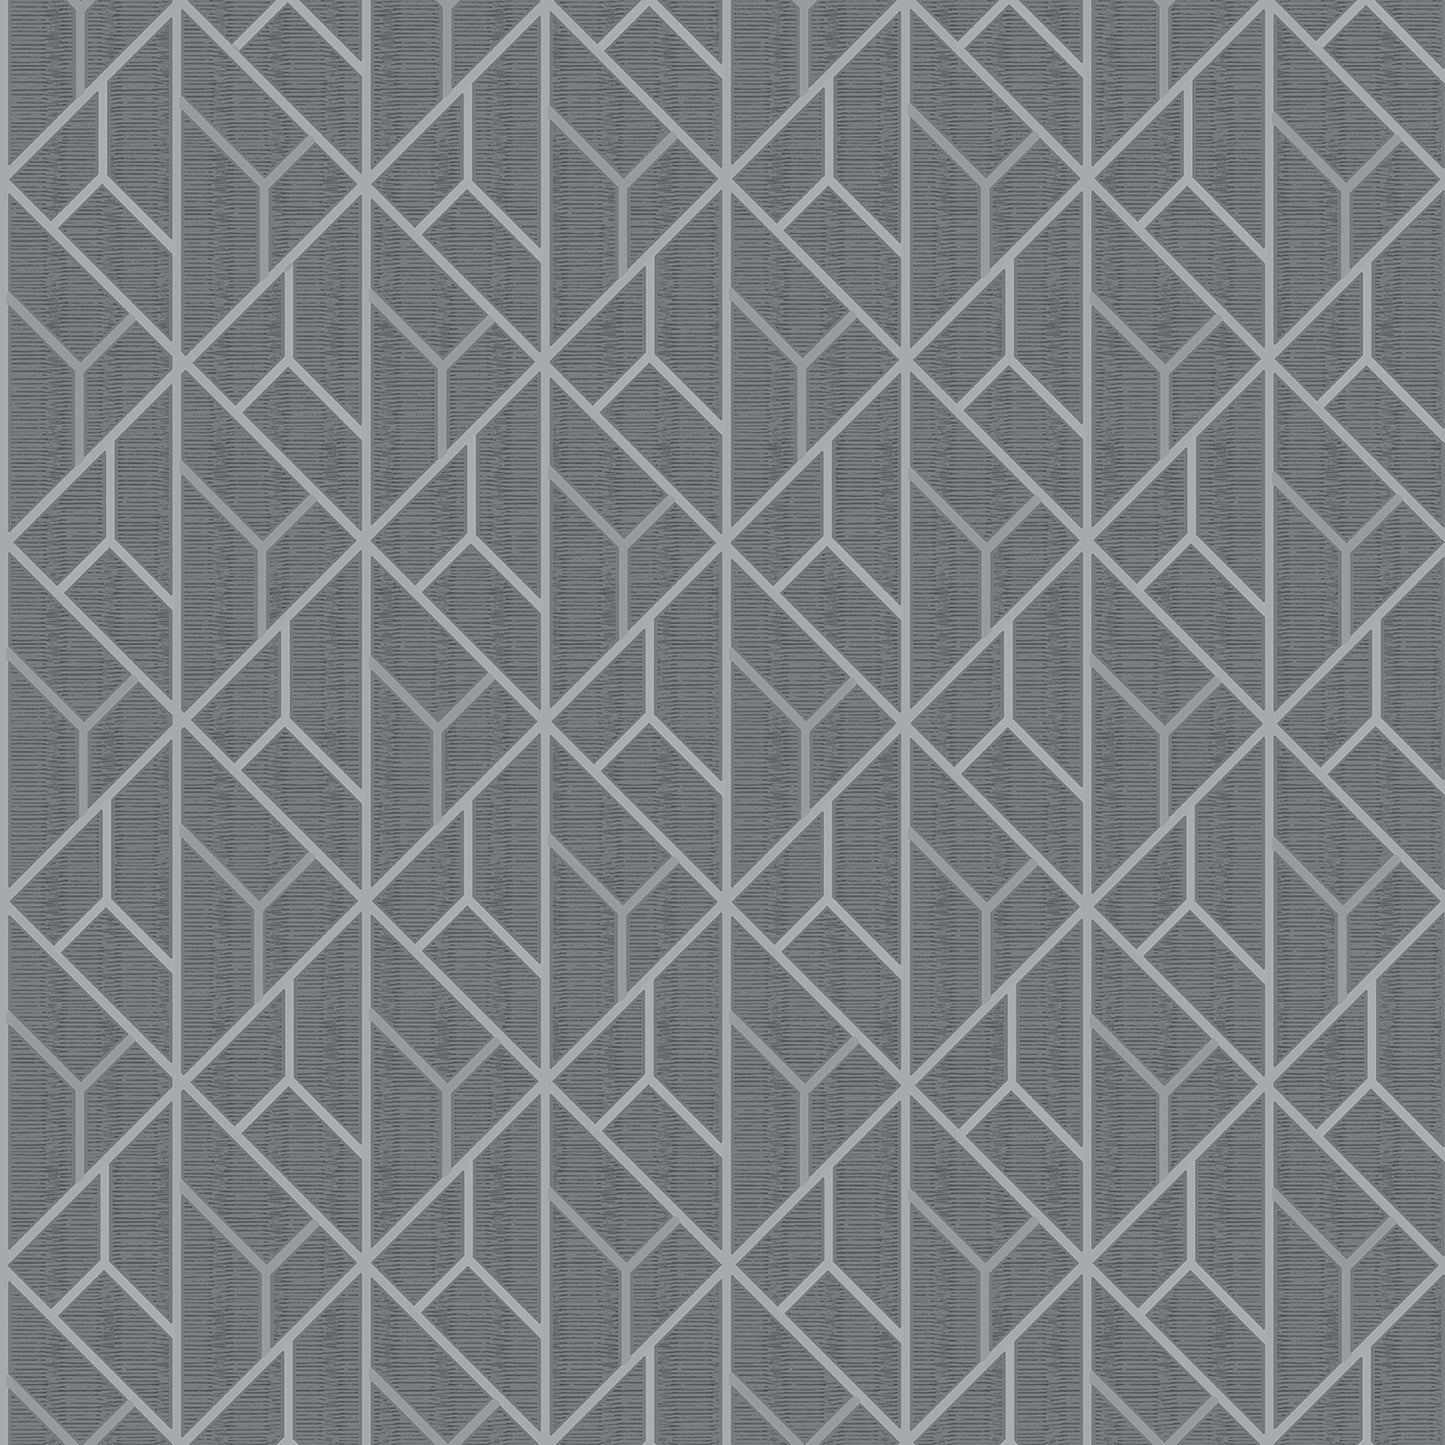 Save 4020-94009 Geo & Textures Wilder Grey Geometric Trellis Grey by Advantage